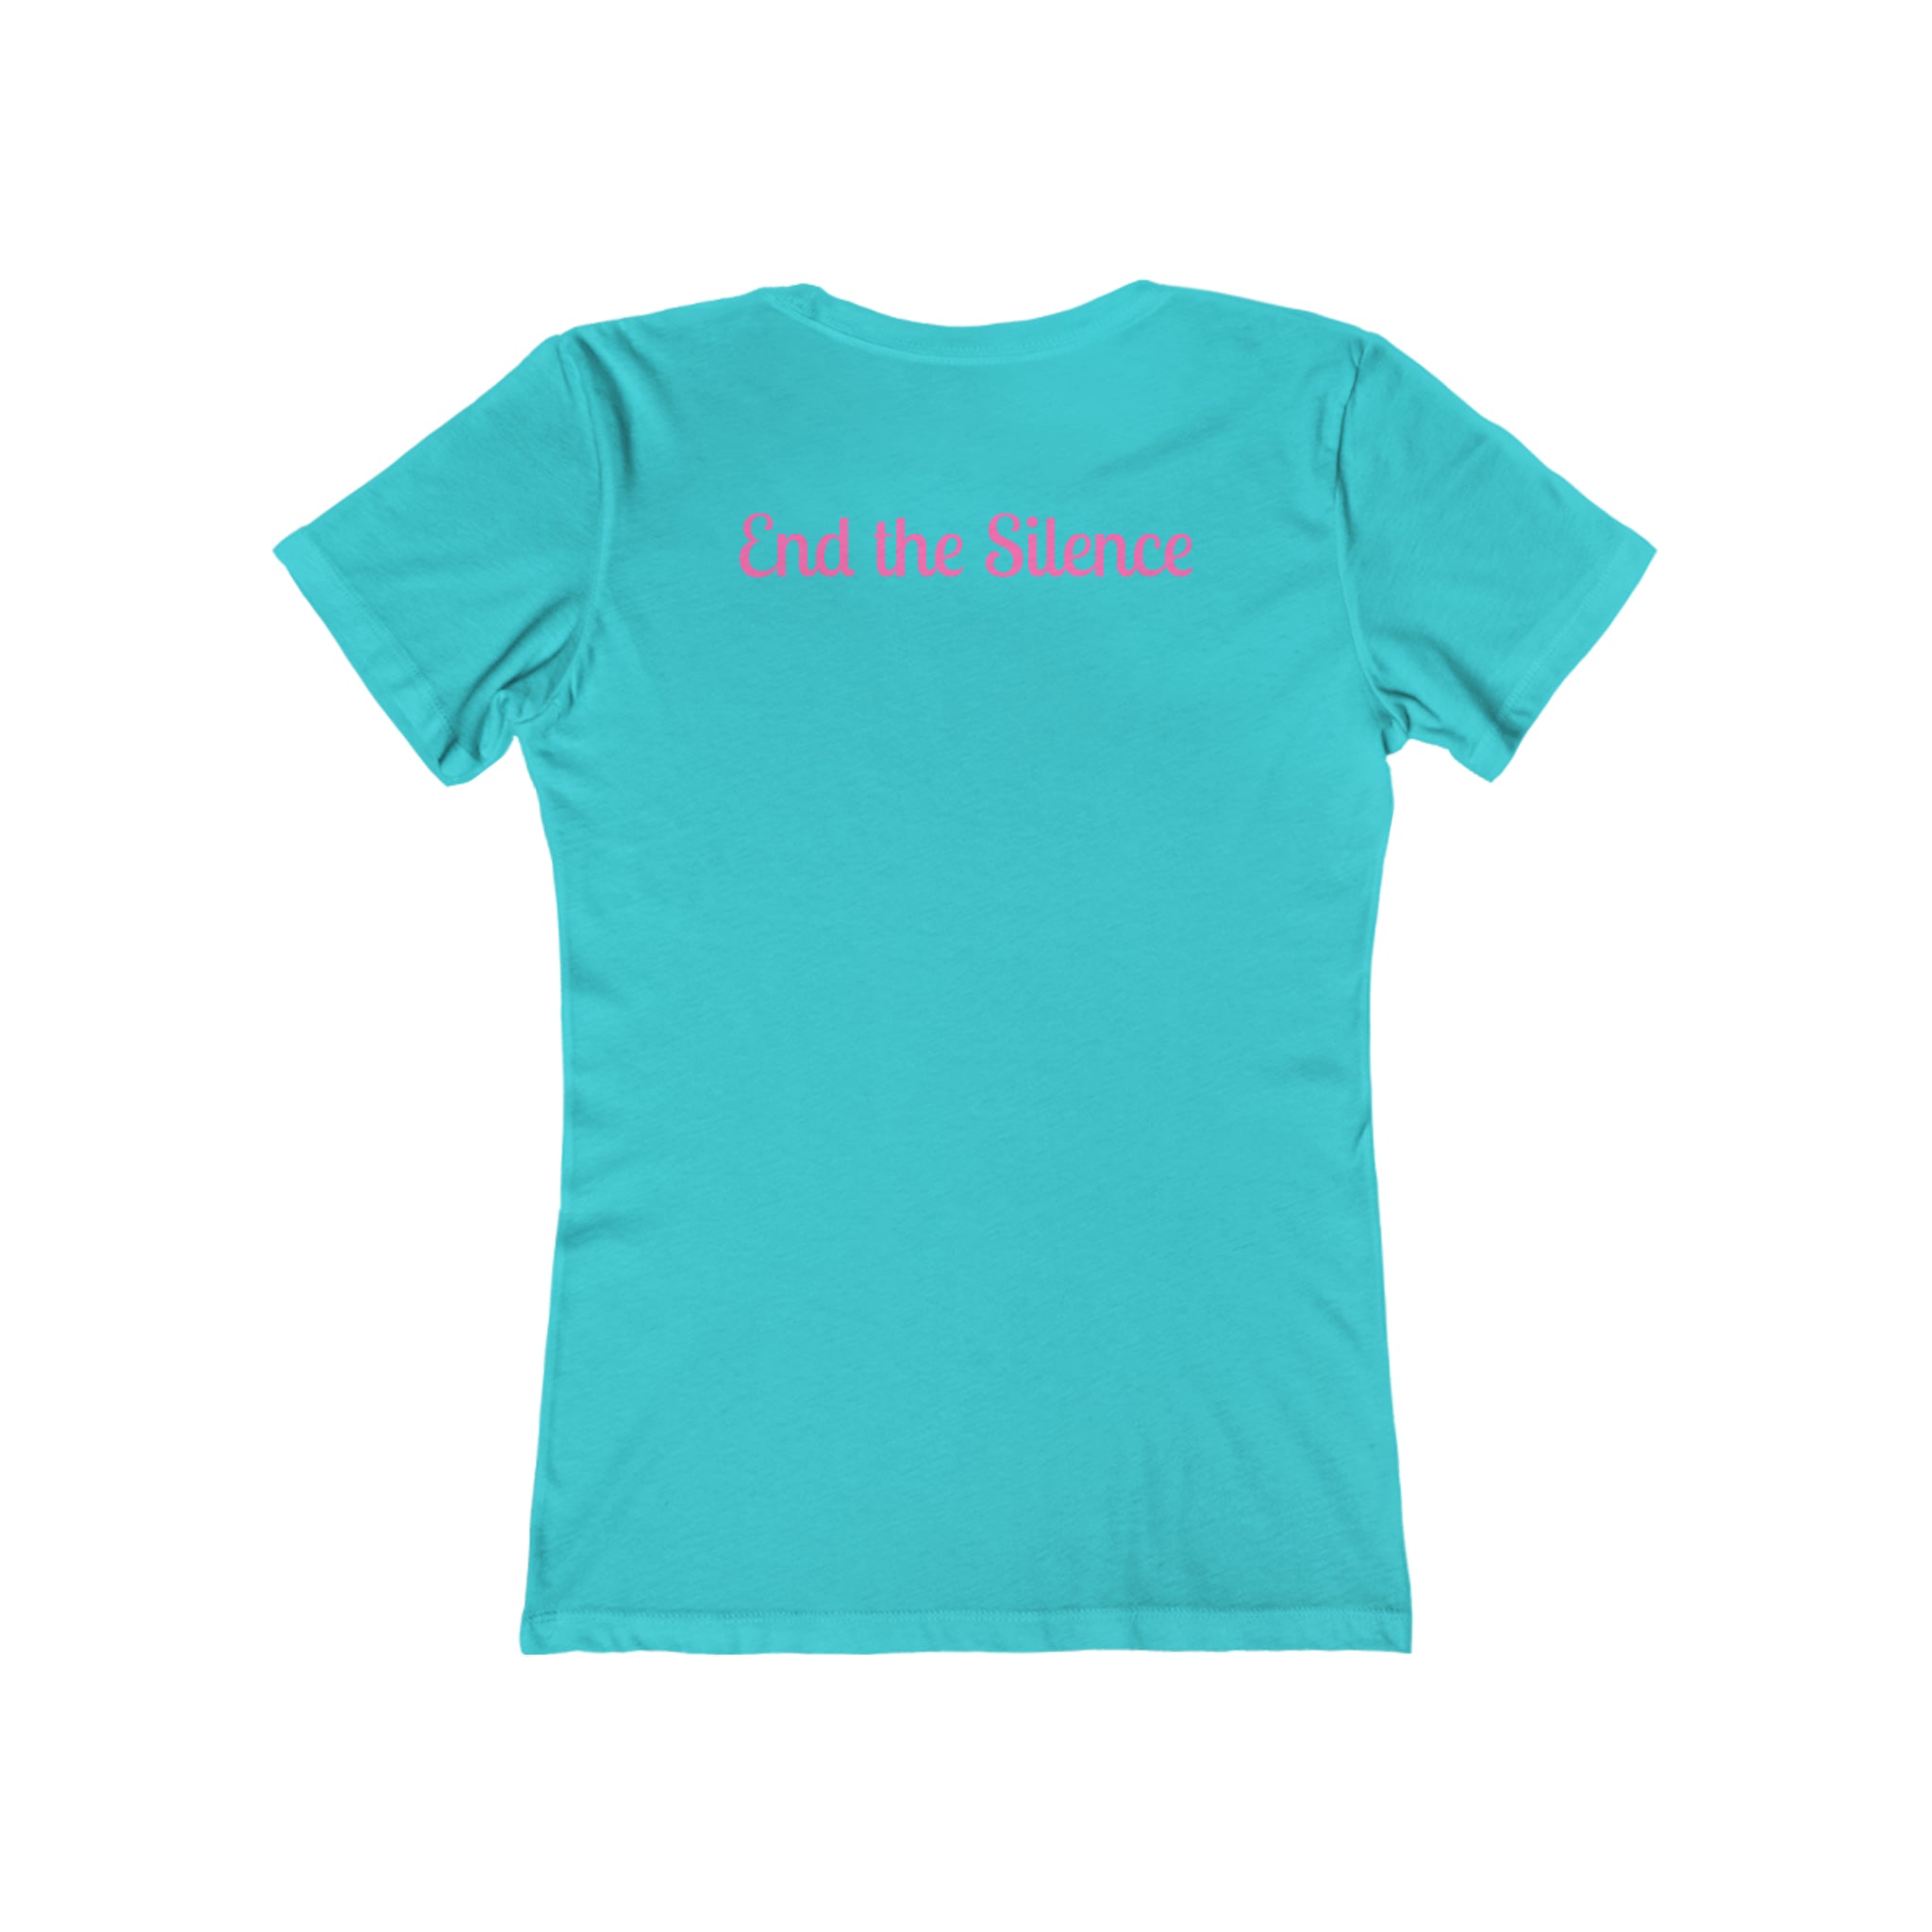 End the Silence Boyfriend Short Sleeve Tee Solid Tahiti Blue Awareness Break the Stigma Mental Health Support Pledge Donation slim fit shirt Tee women shirt T-Shirt 9212477002356289526_2048_6cc6922a-643c-423f-b6ab-11e61d3bf8b1 Printify